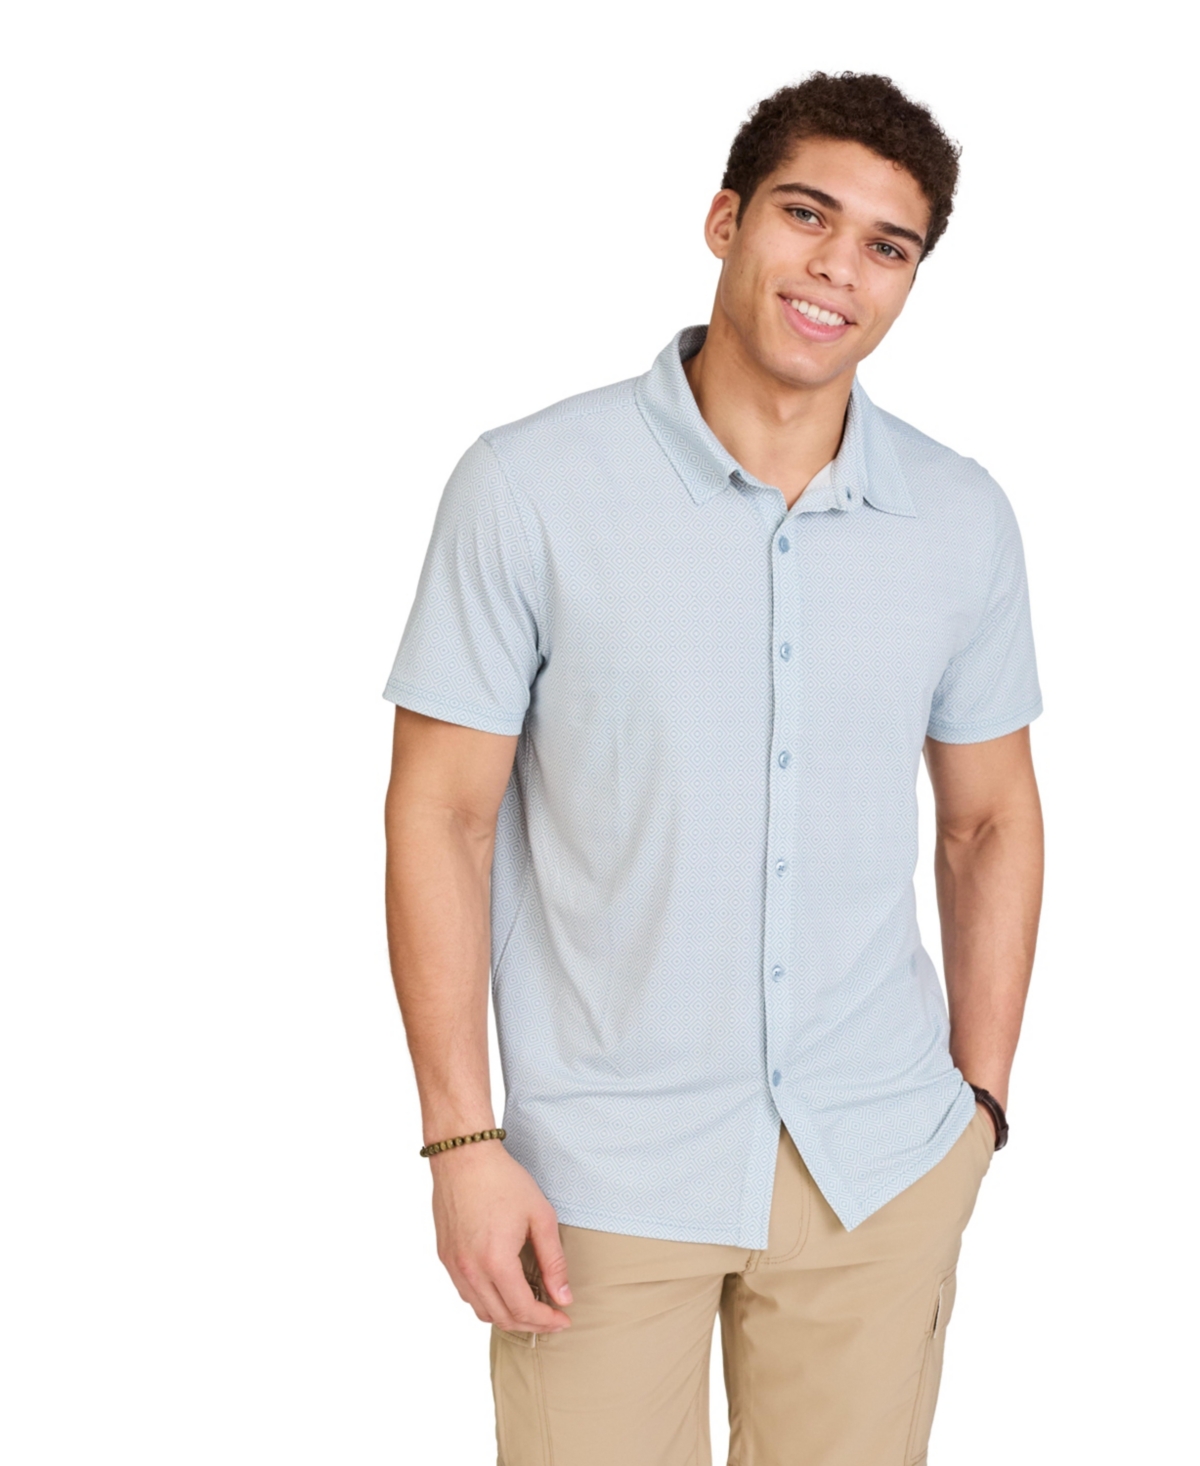 Men's Mosaic Short Sleeve Button Up Shirt - Tap shoe diamonde